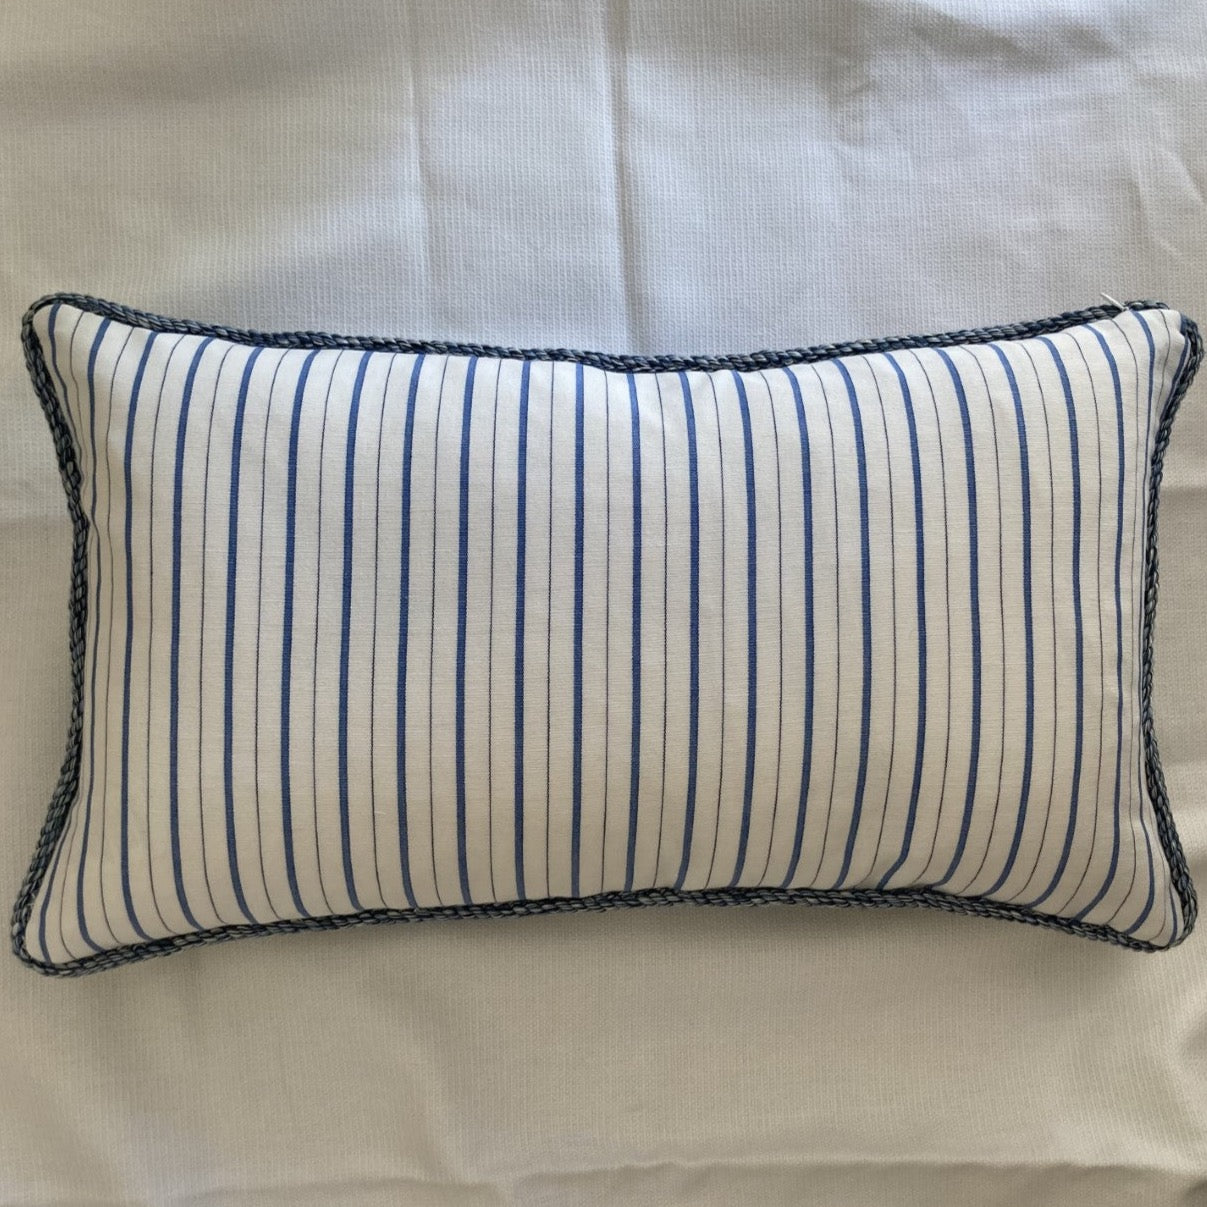 Garden Gazebo Toile 14 x 24 Rectangle Decorative Pillow with Down Feather Insert